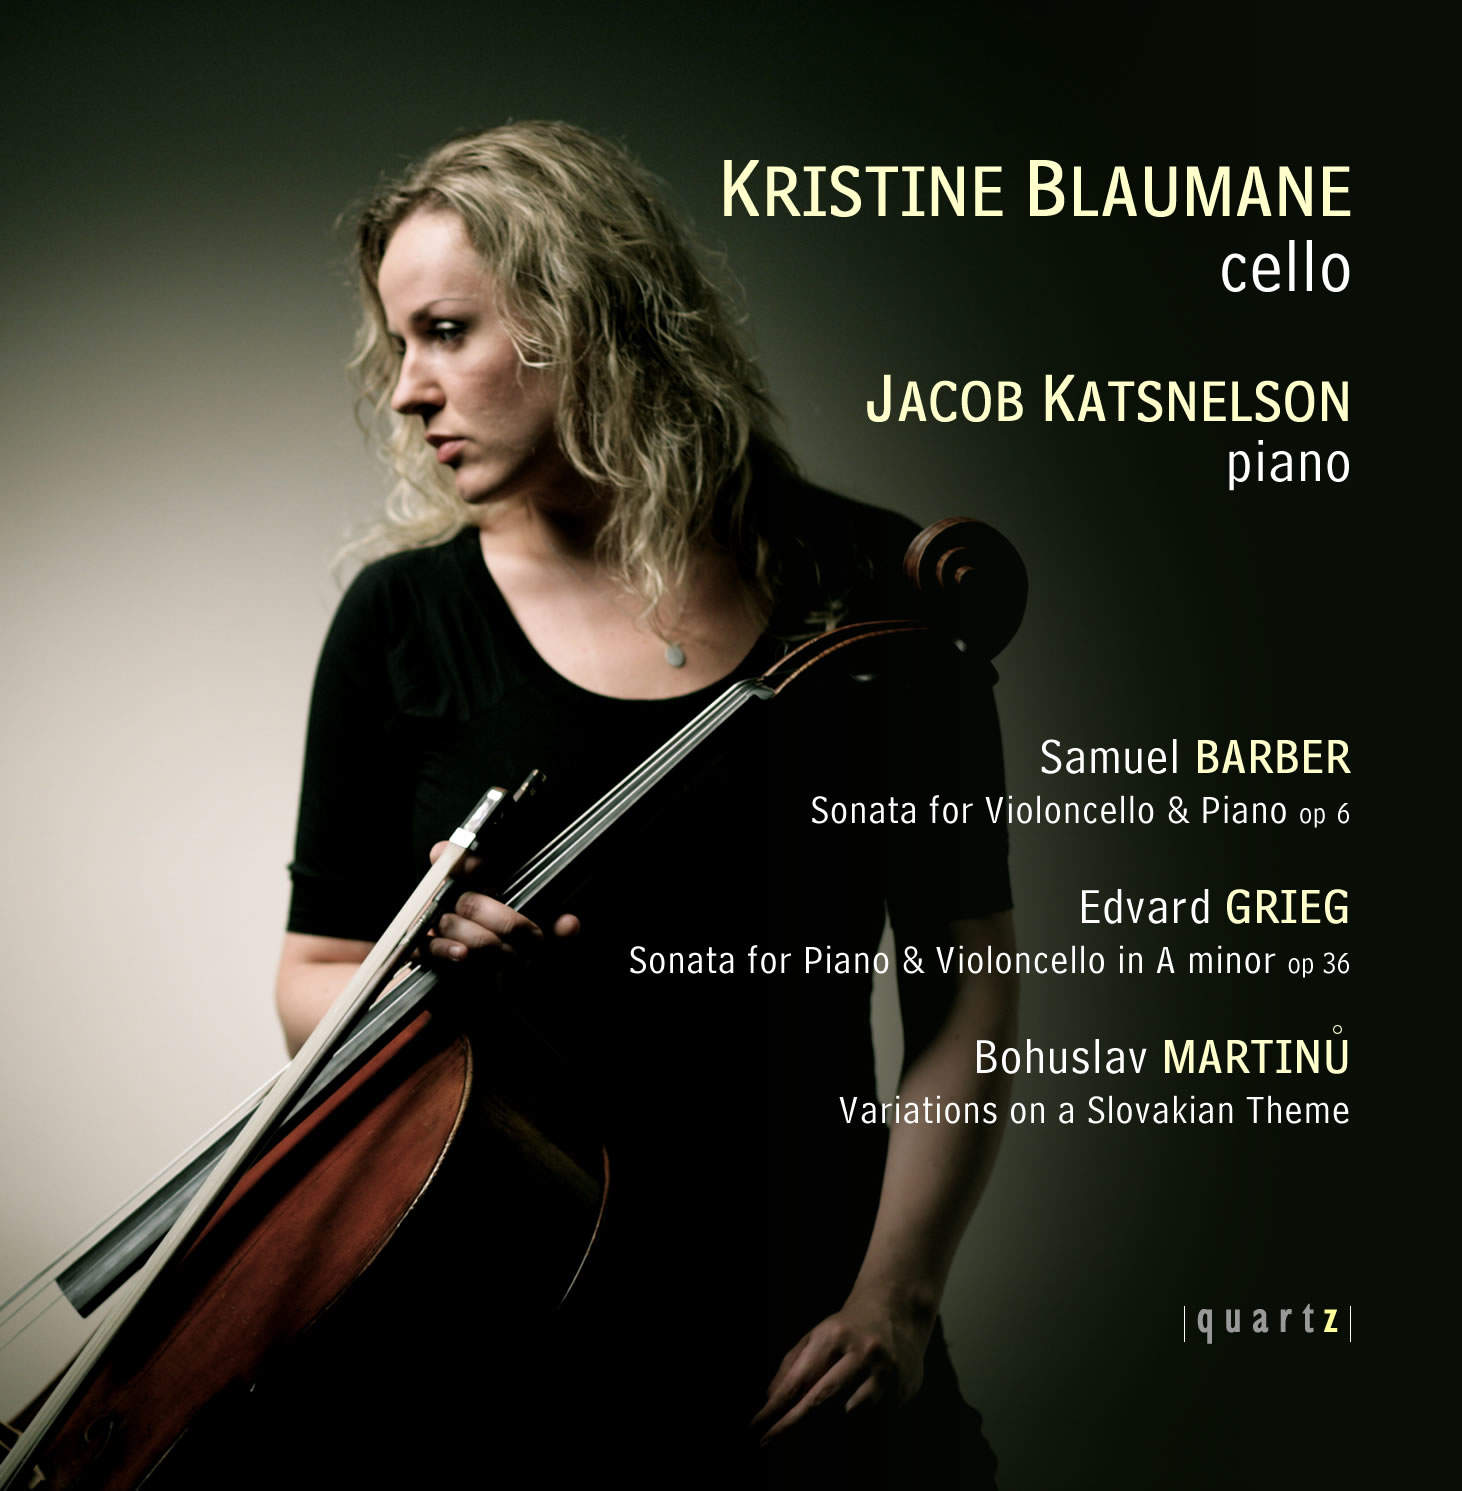 Kristine Blaumane (cello) and Jacob Katsnelson (piano)